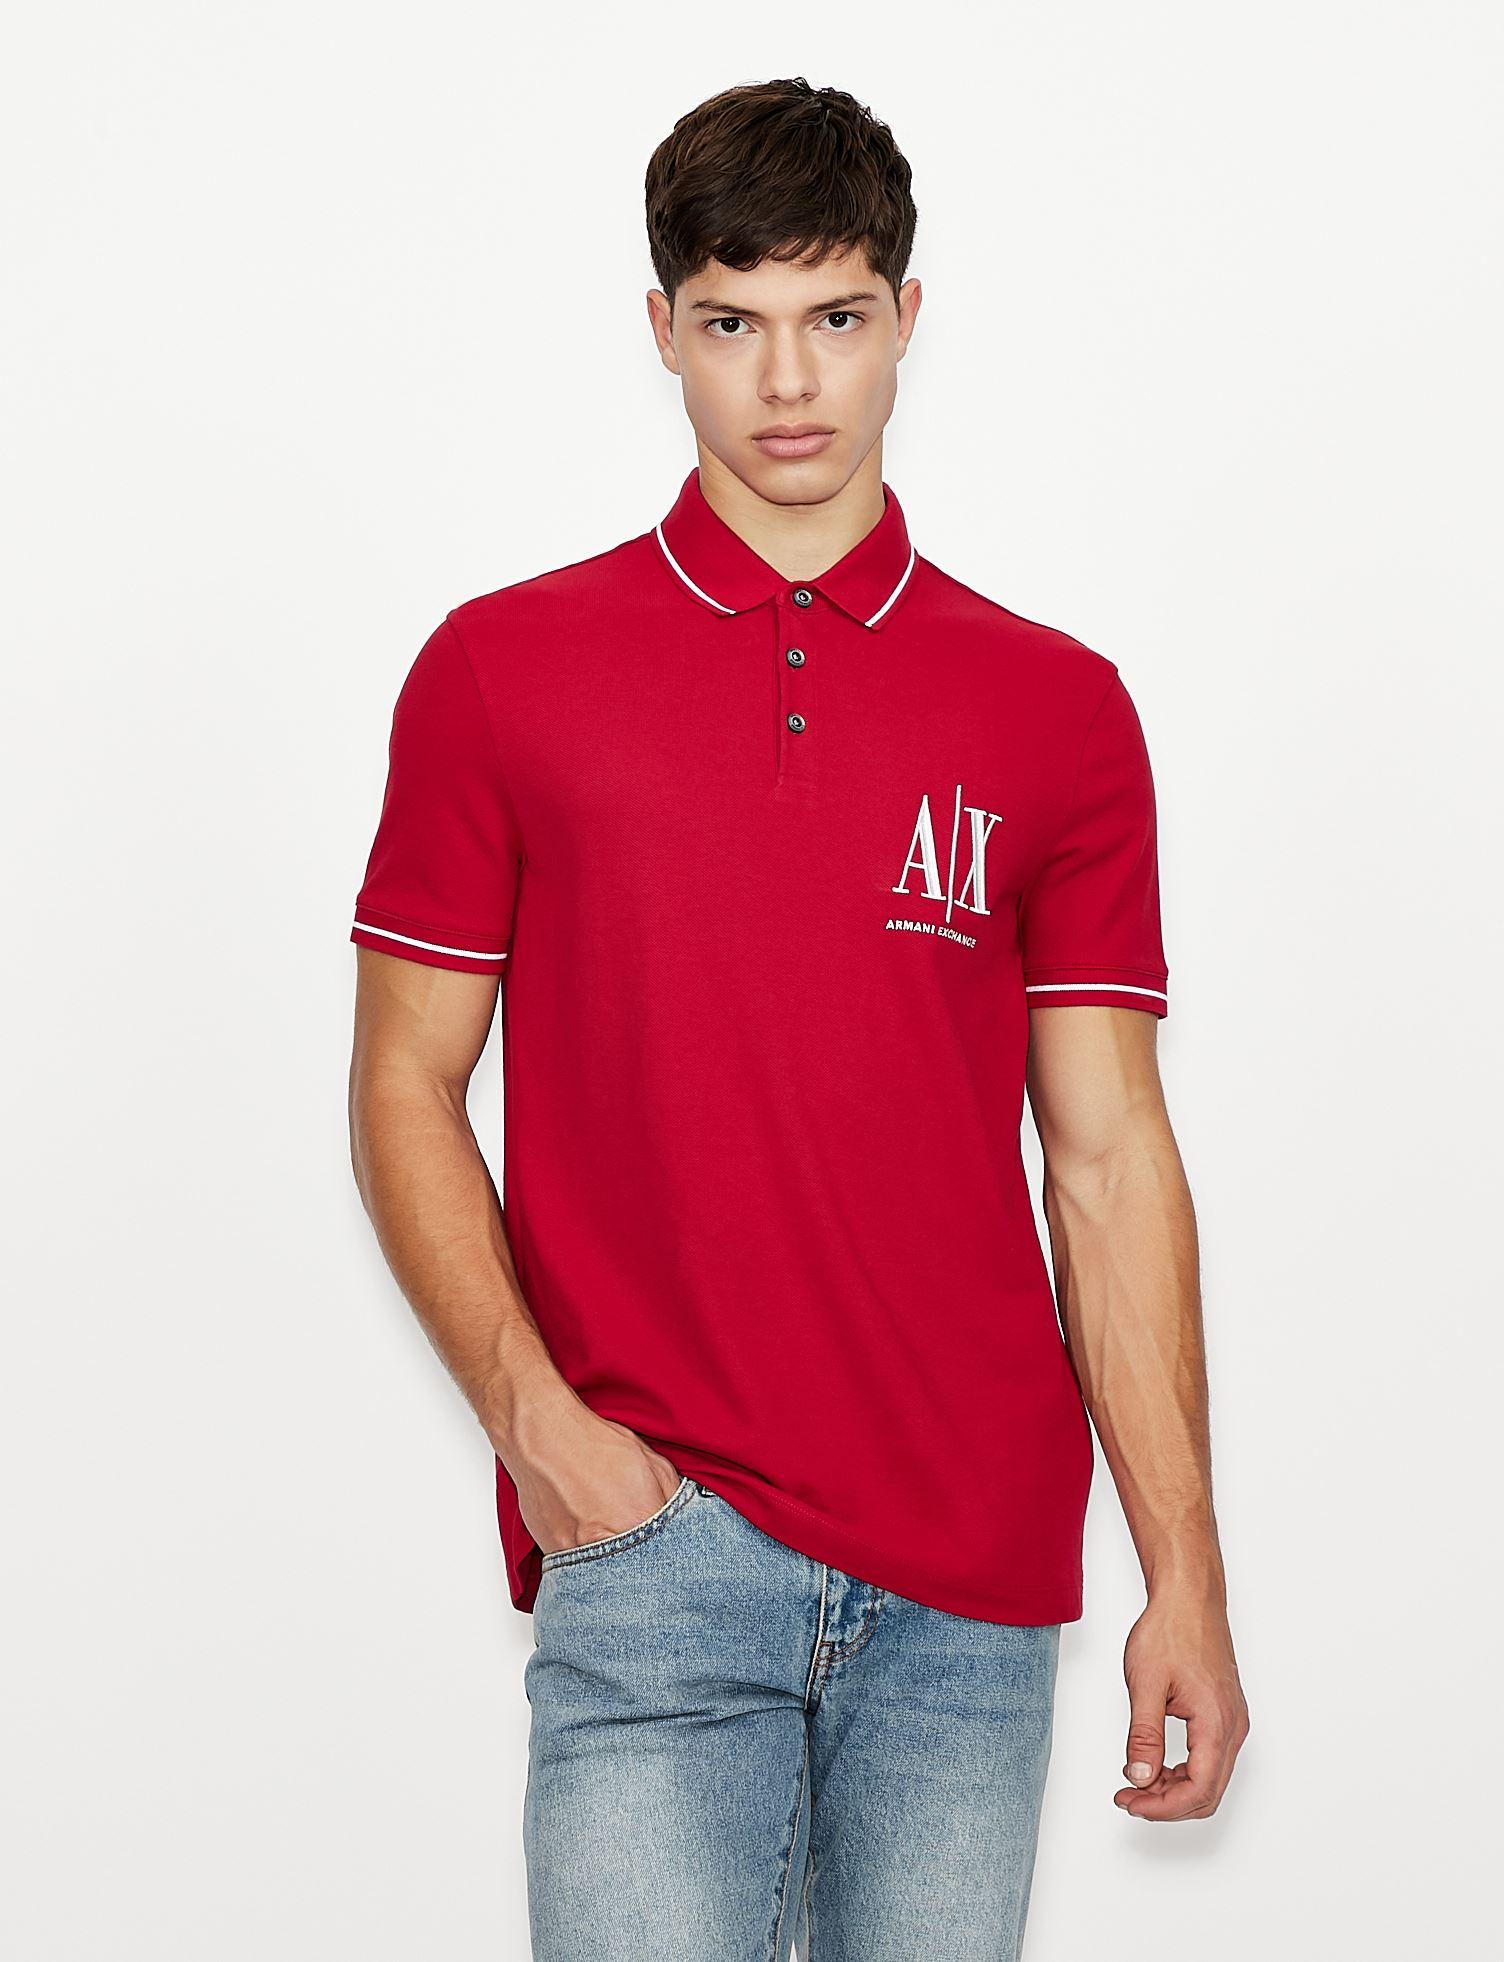 Armani Exchange Icon Logo Cotton Piqué Polo Shirt in Red for Men - Lyst